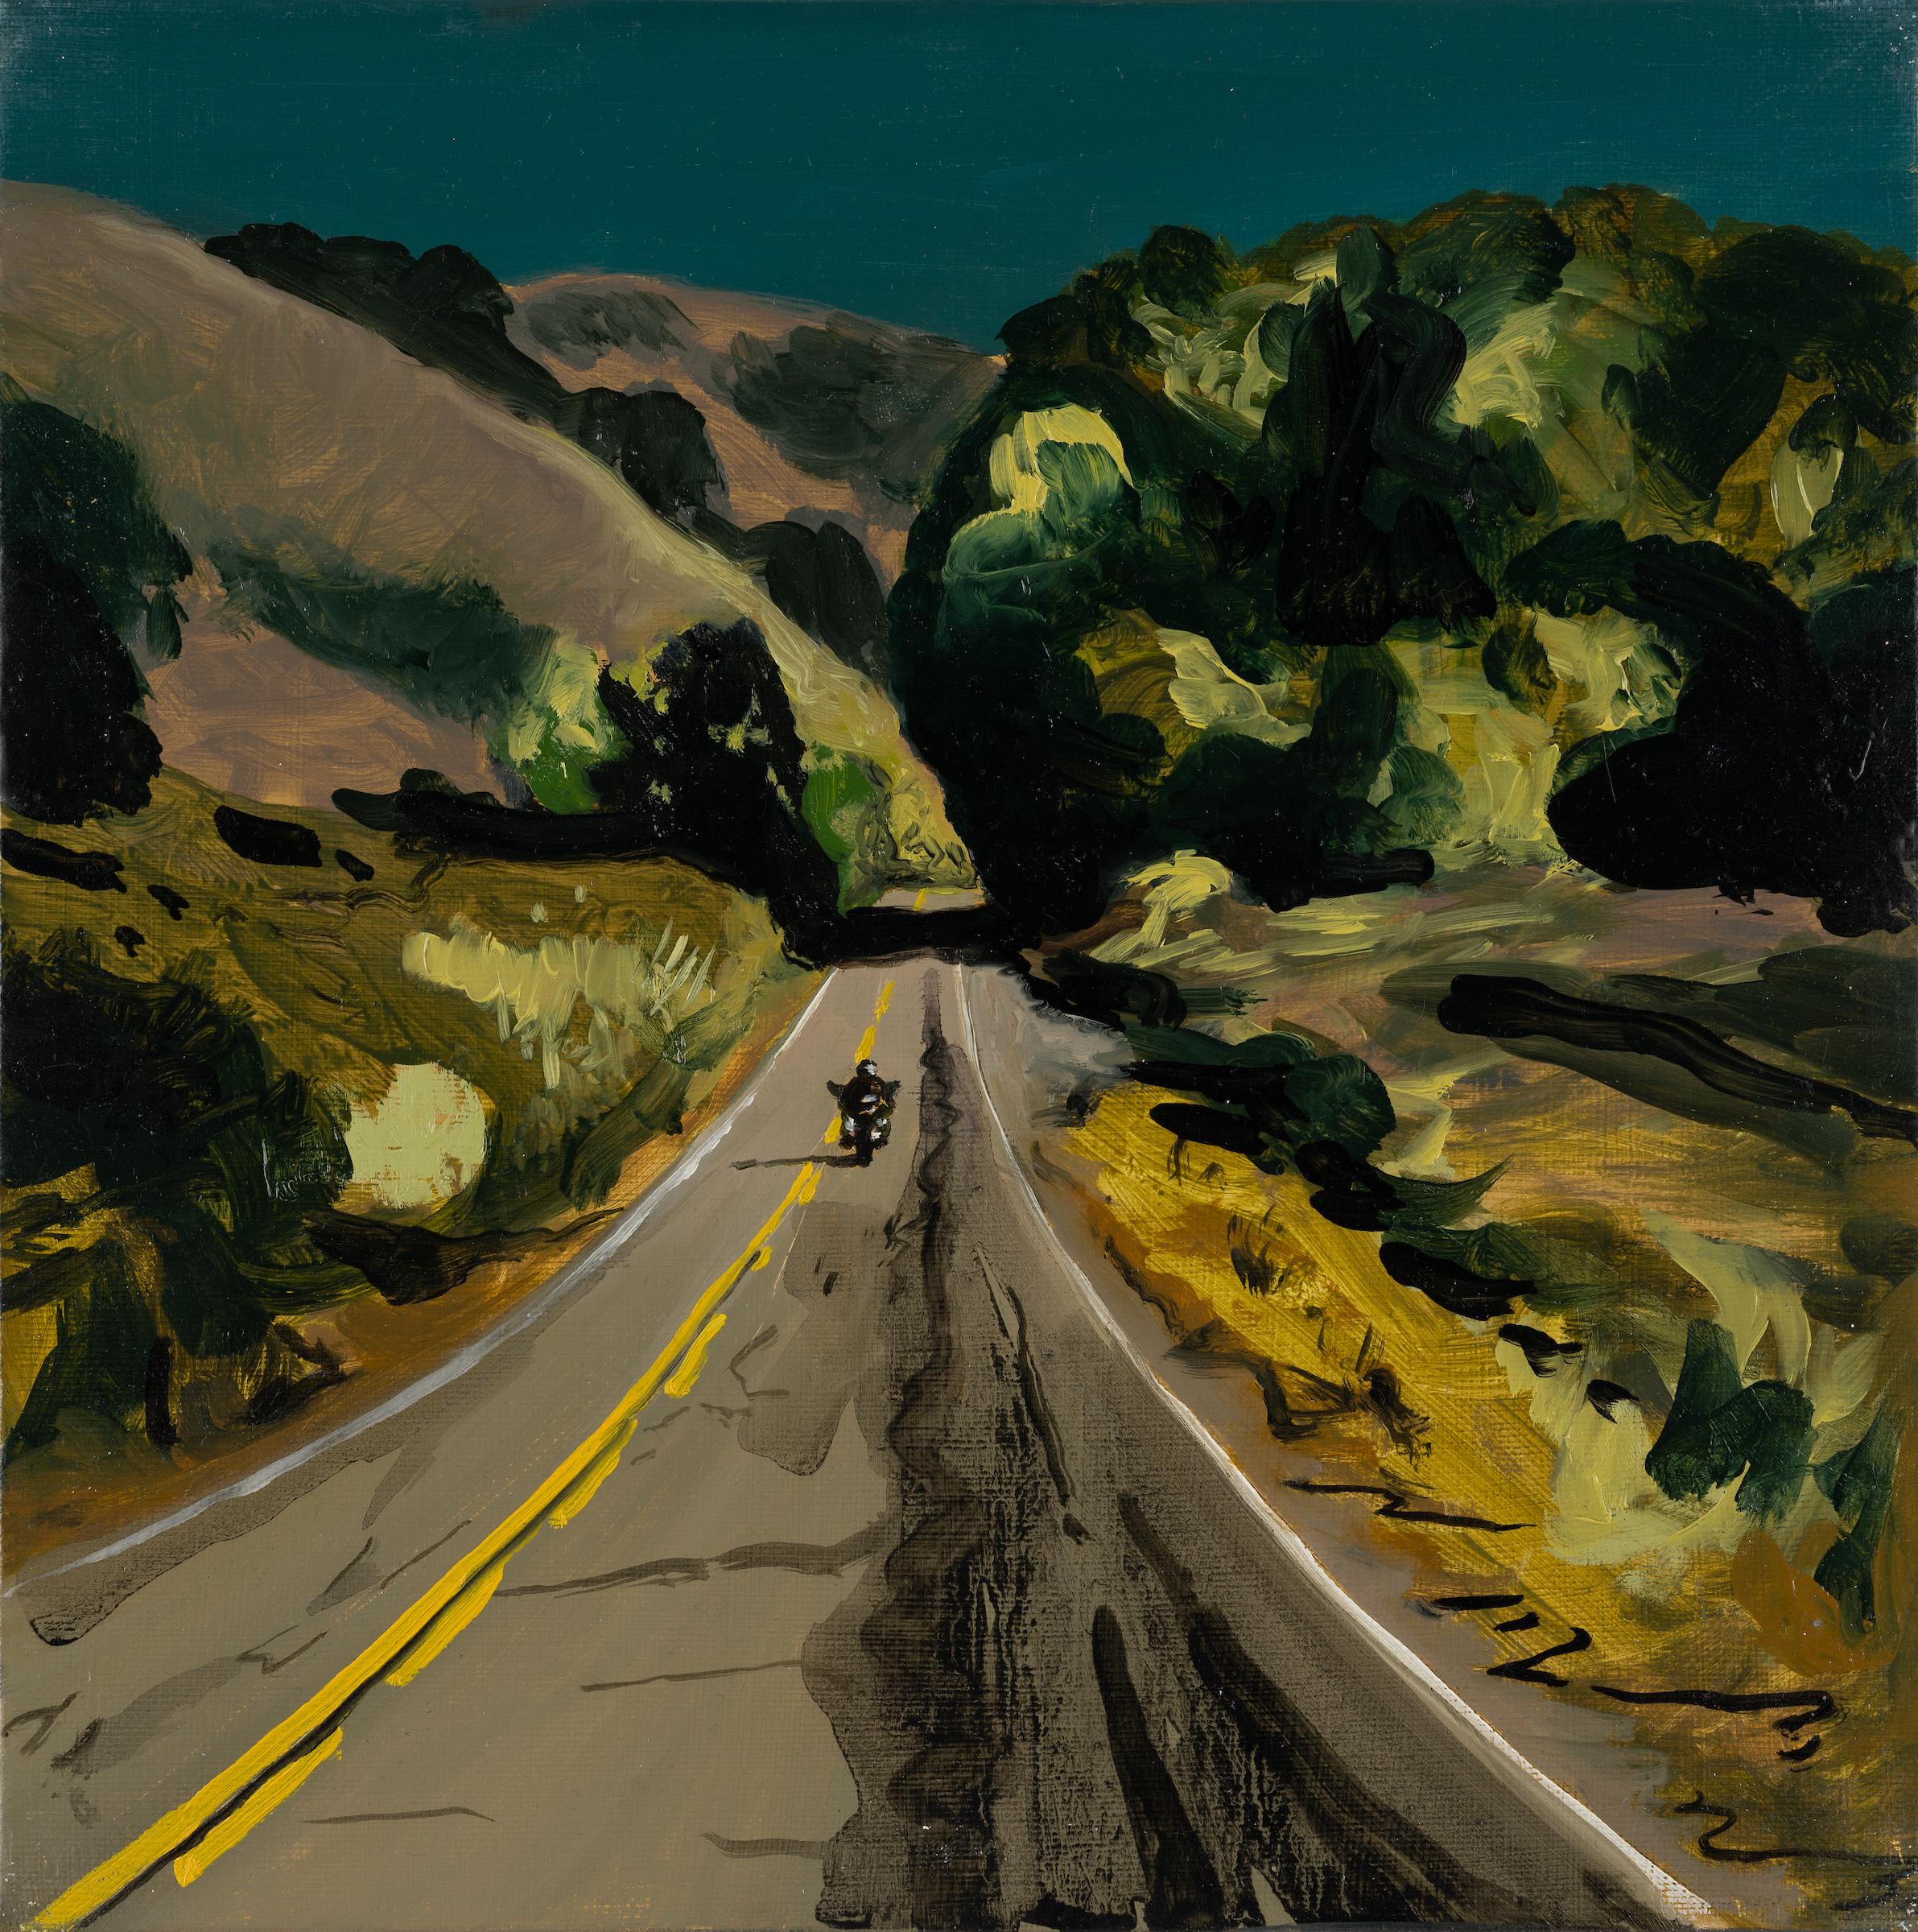 Piotr Szczur Landscape Painting - THE ROAD TO MALIBU - Expressive, Colourful USA Landscape Oil Painting, Biker